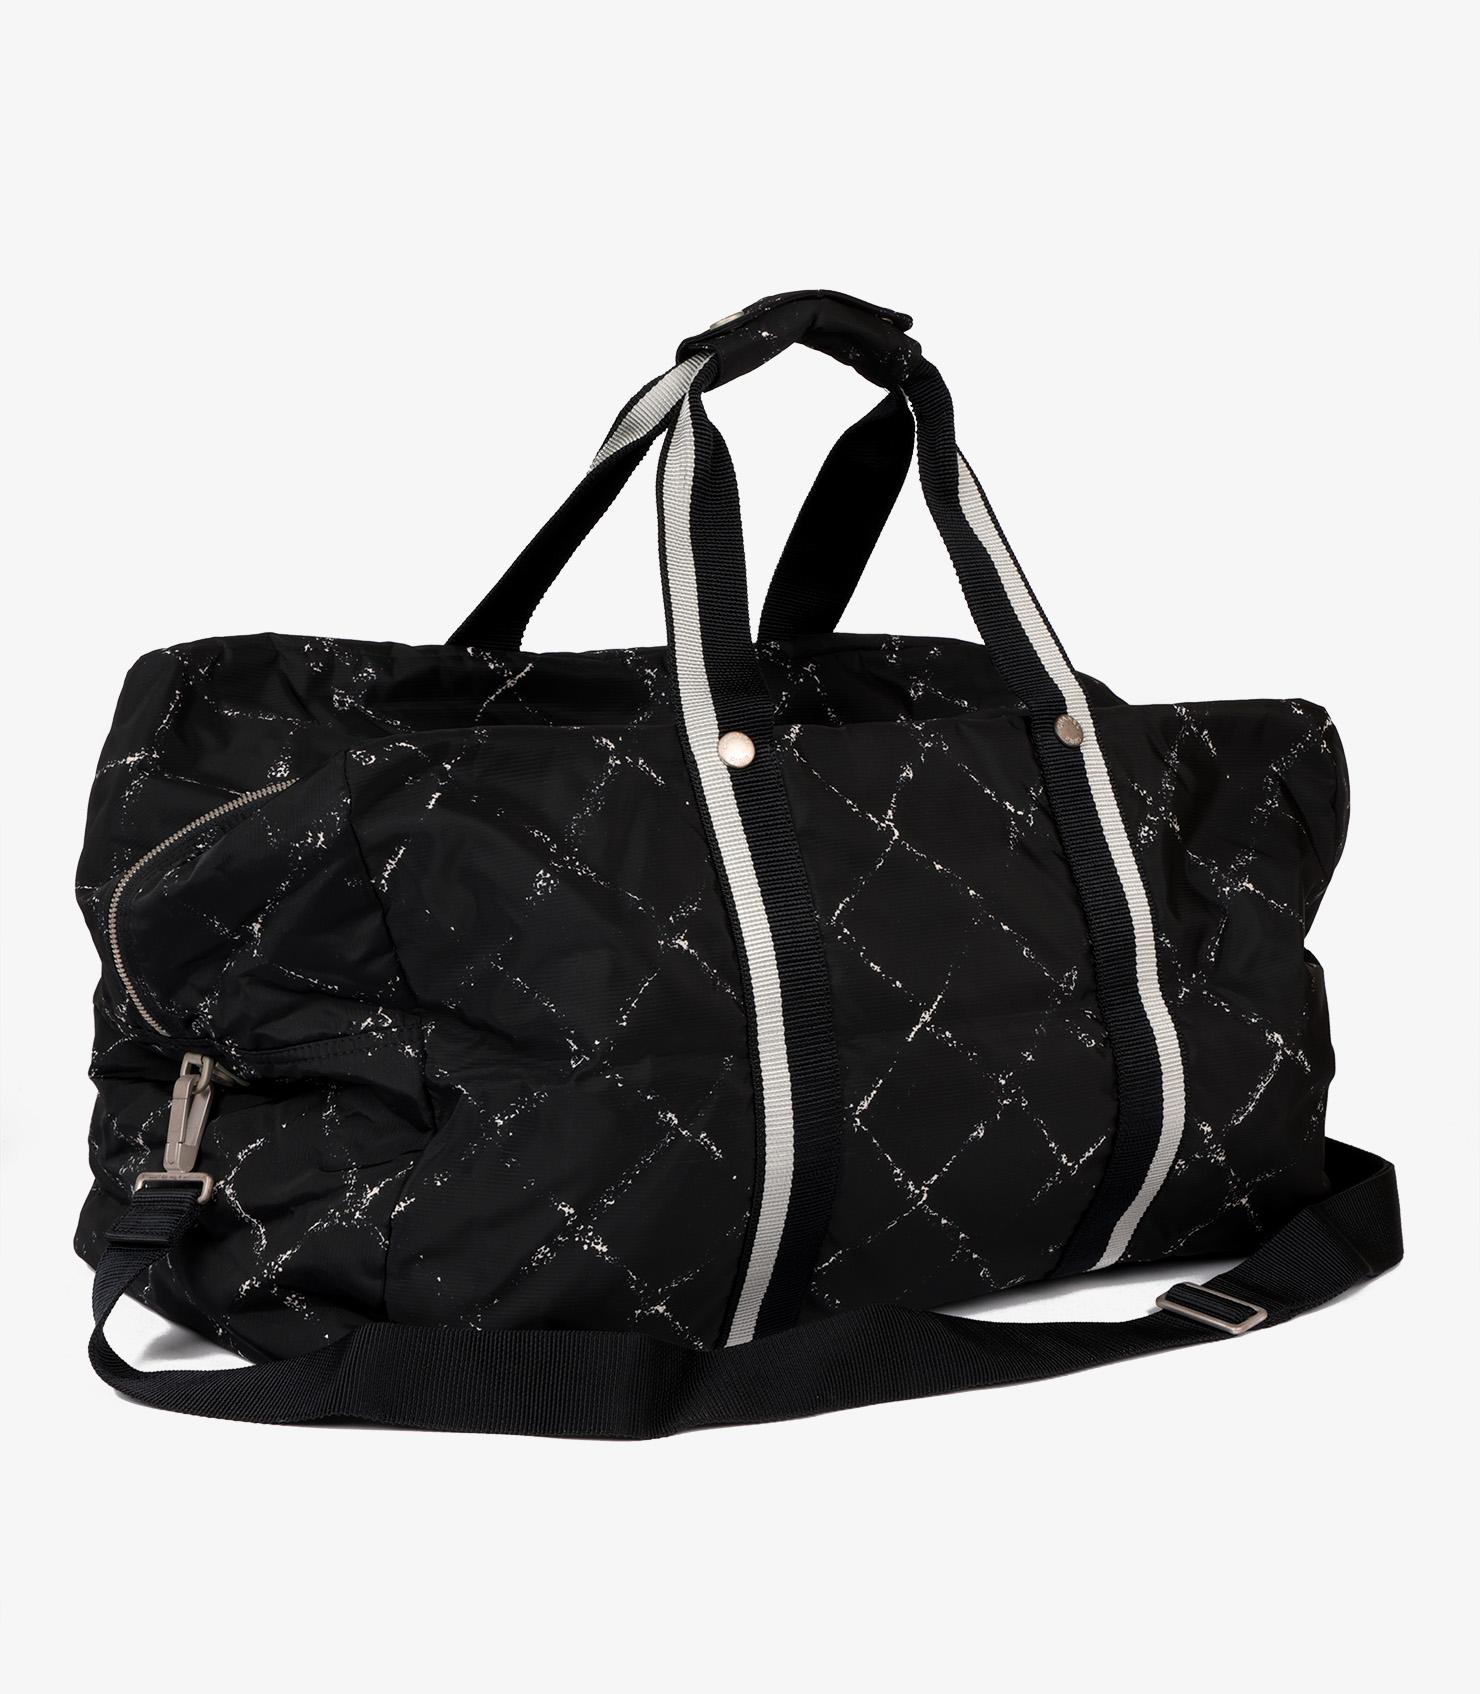 Chanel Black & White Nylon Travel Line Duffle Bag 1